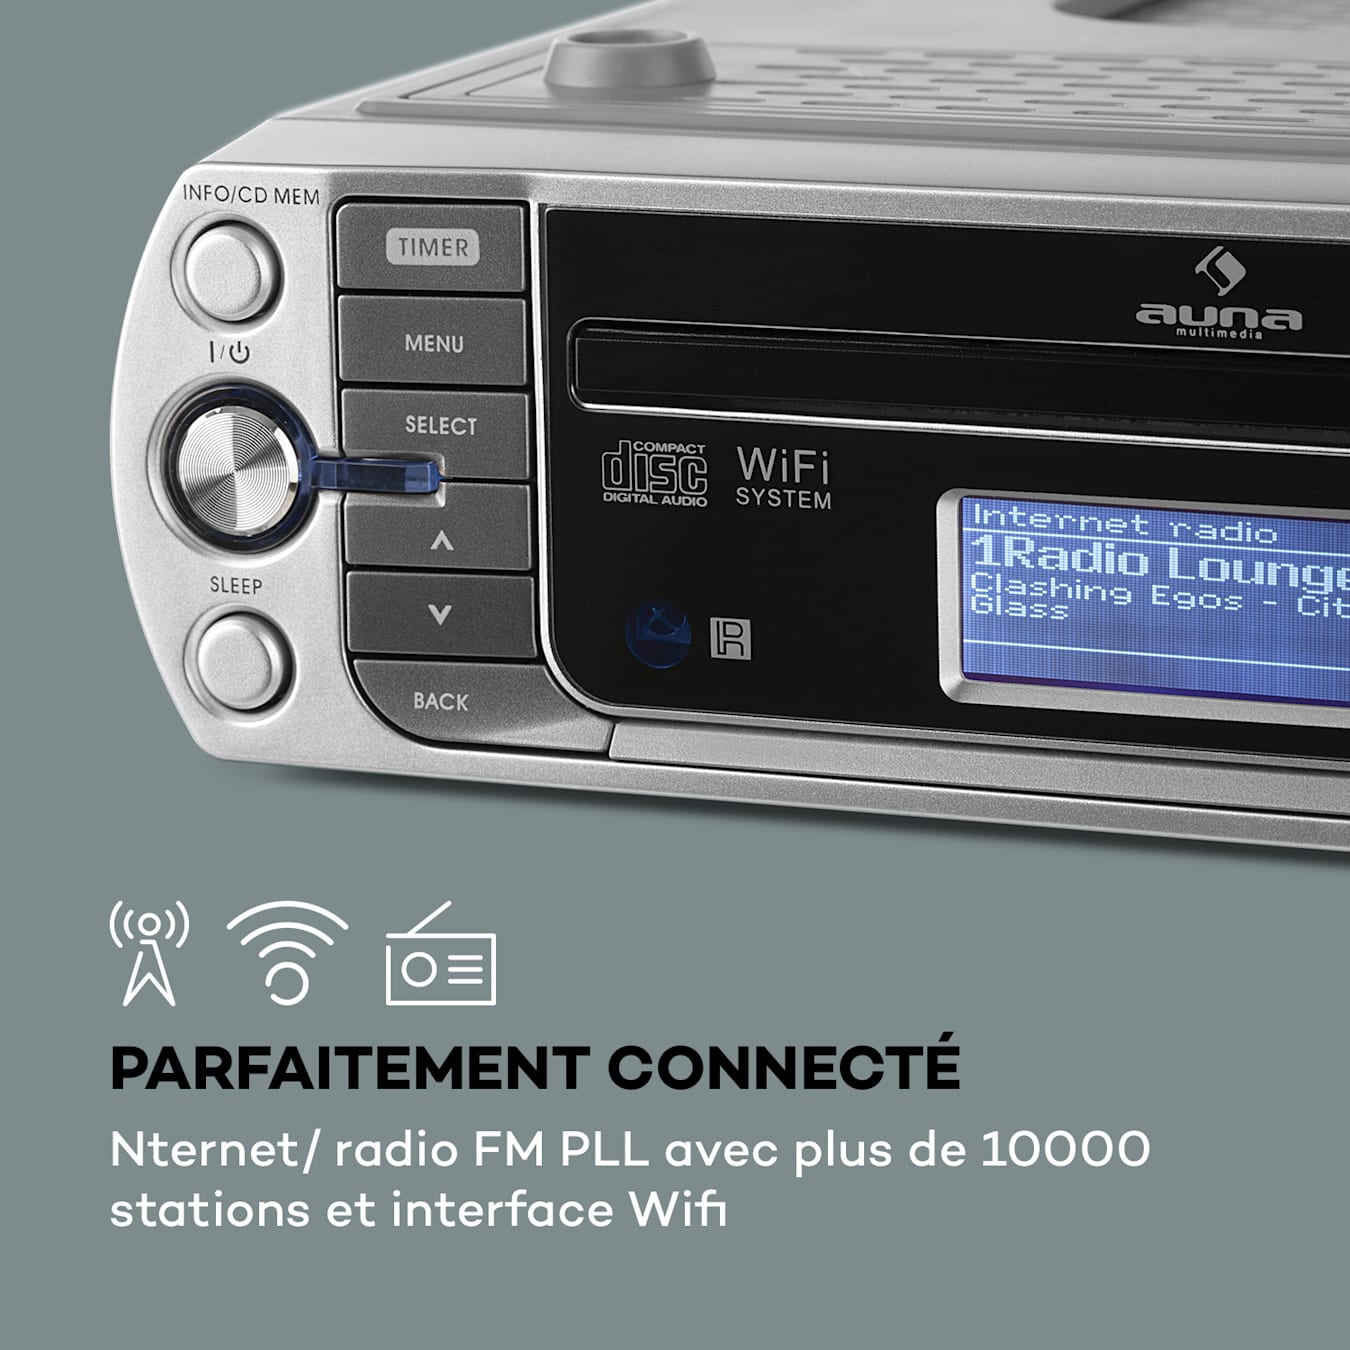 KR-500 CD Radio de cuisine, Radio Internet, WiFi